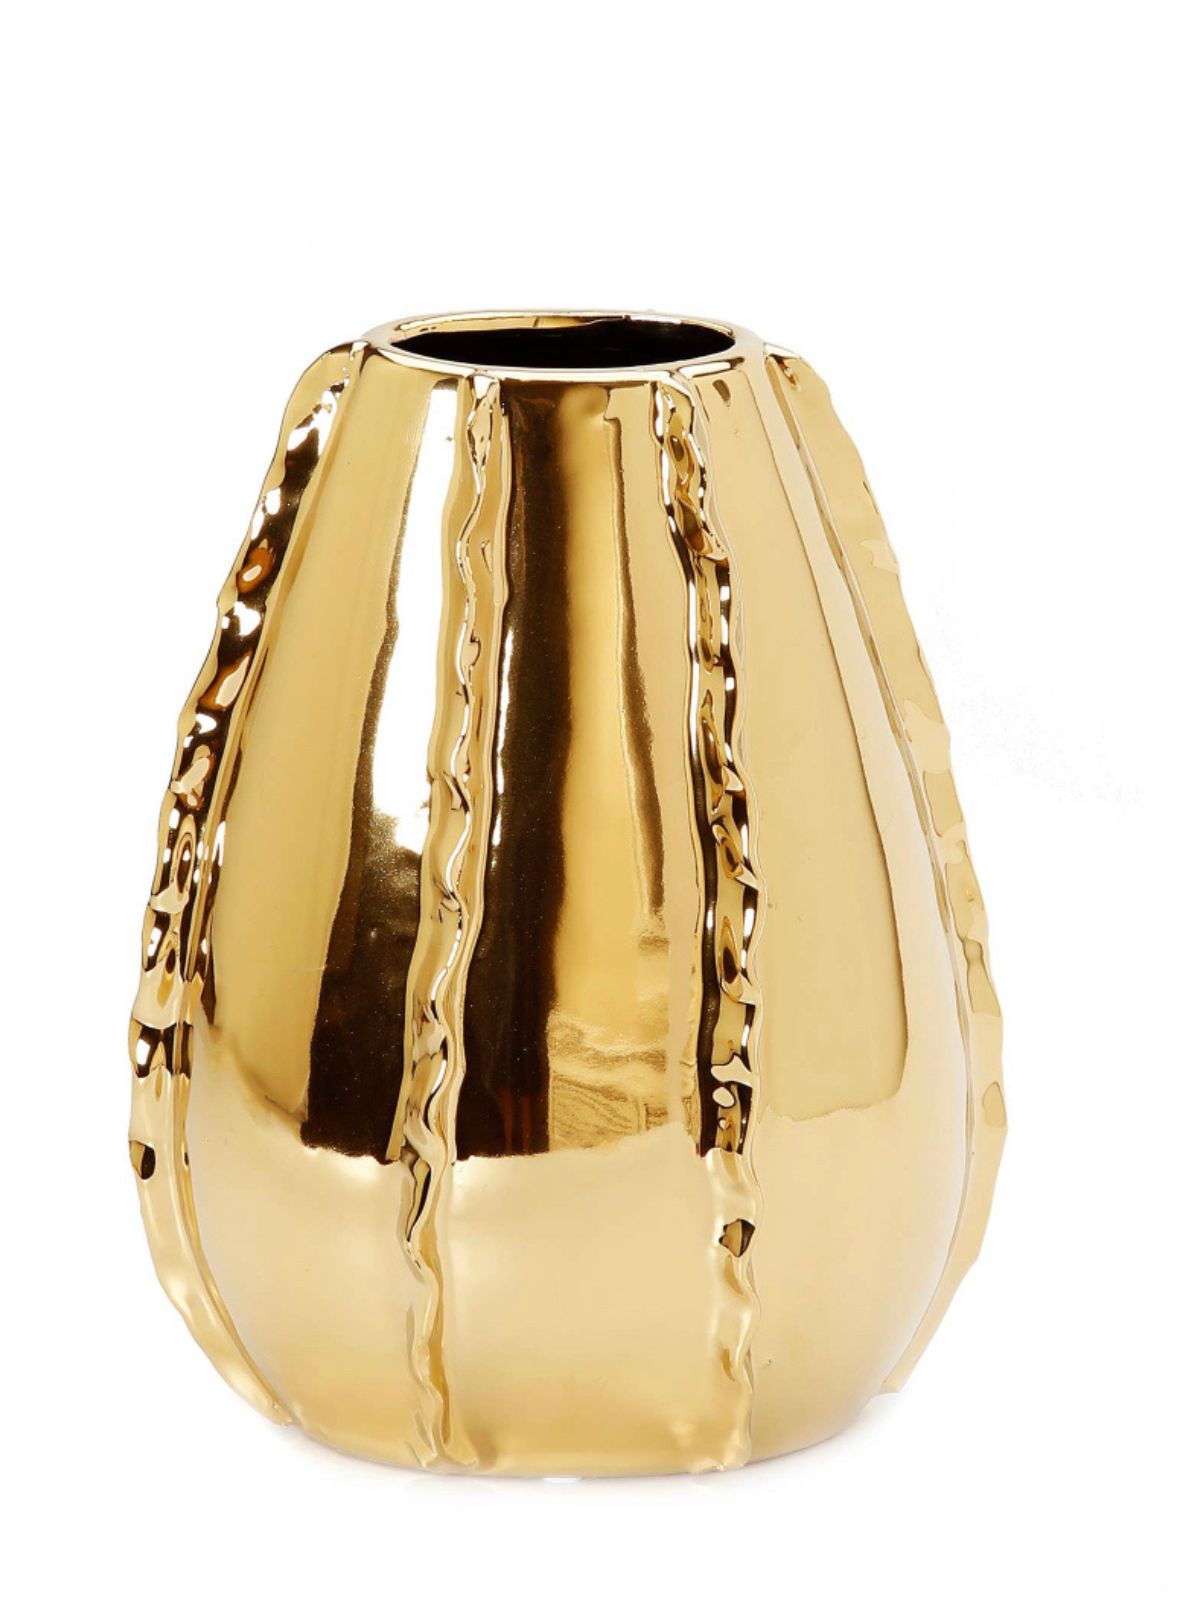 7H Glossy Gold Tear Shaped Ceramic Vase with Luxury Swivel Design - KYA Home Decor